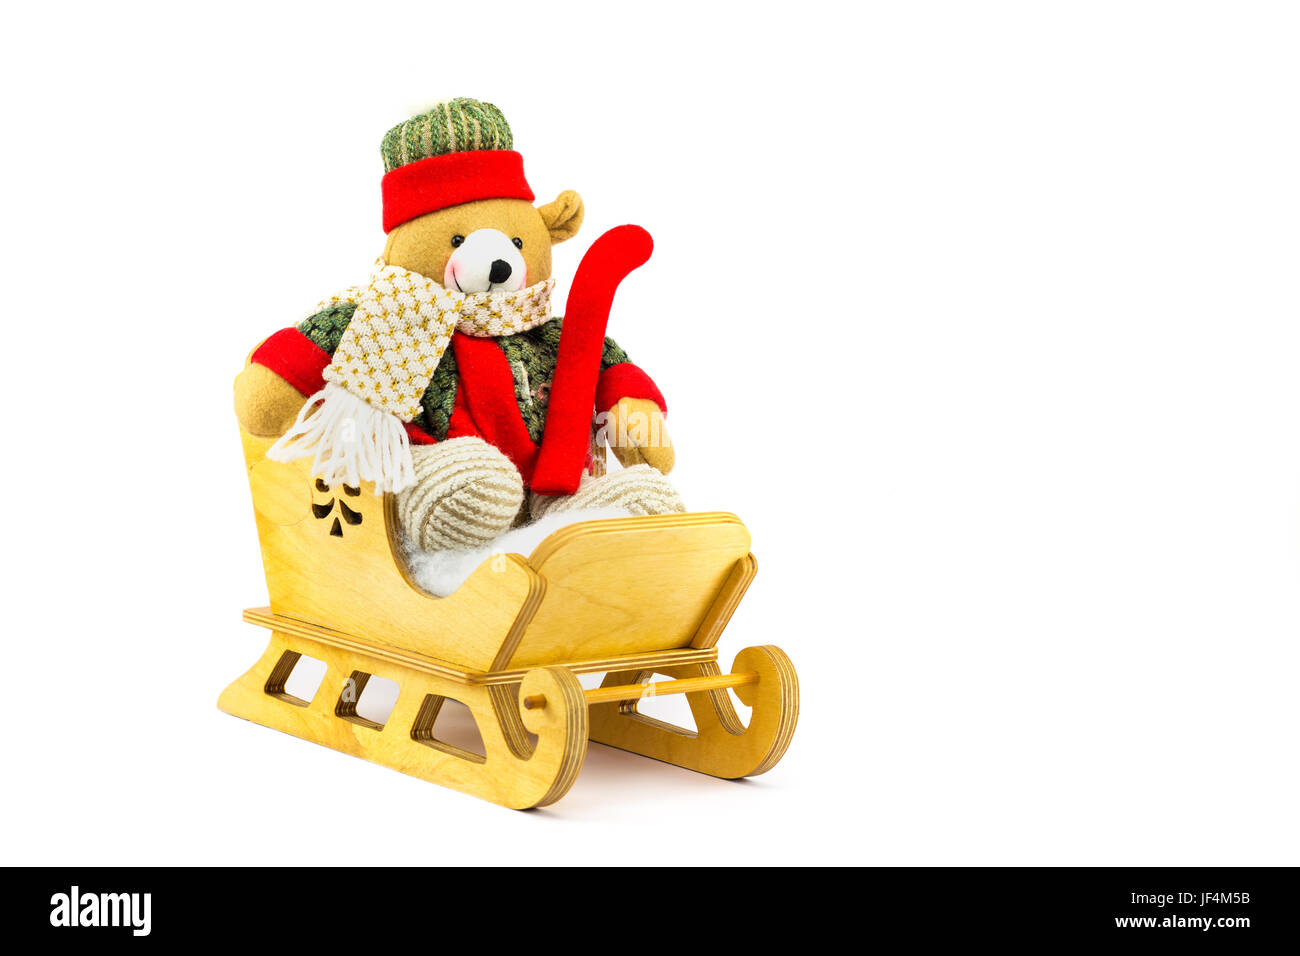 Christmas bear in wooden sleigh on white Stock Photo